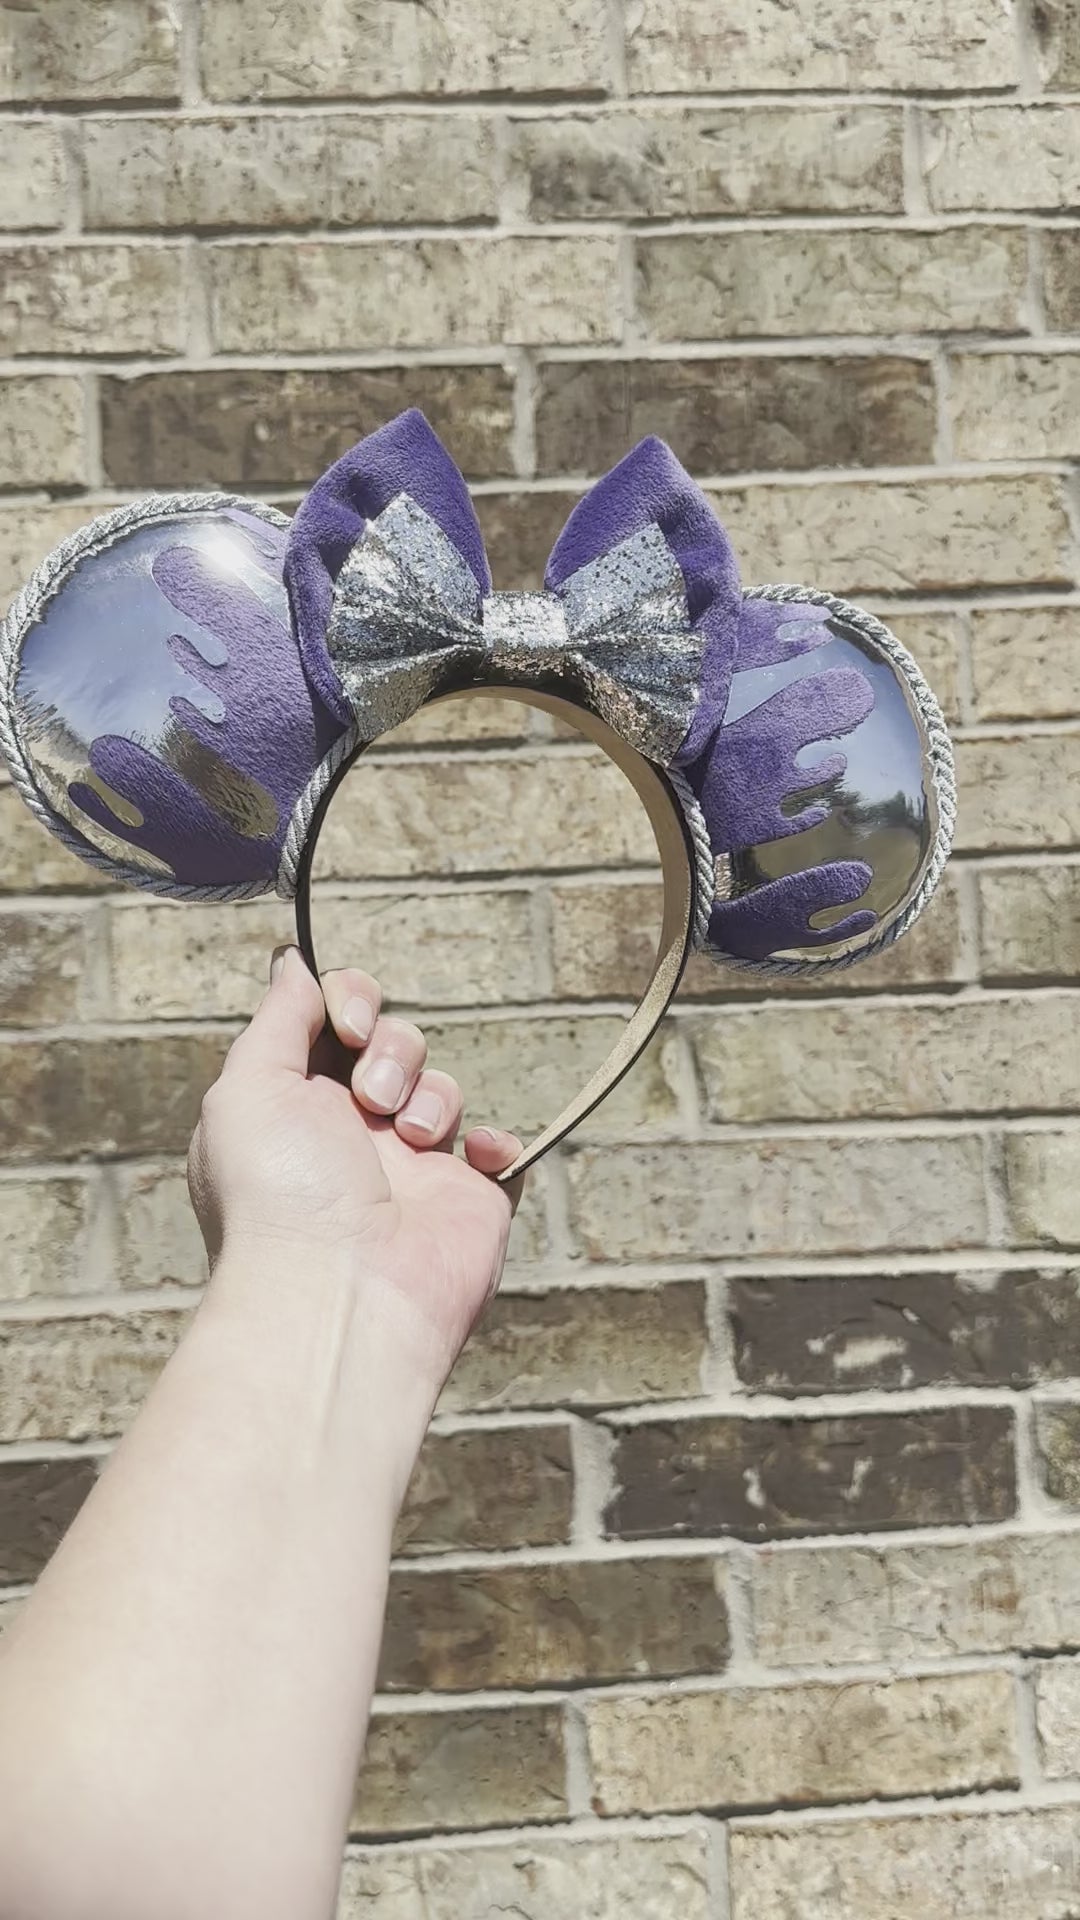 Disney Ears Headband - Disney100 Minnie Mouse